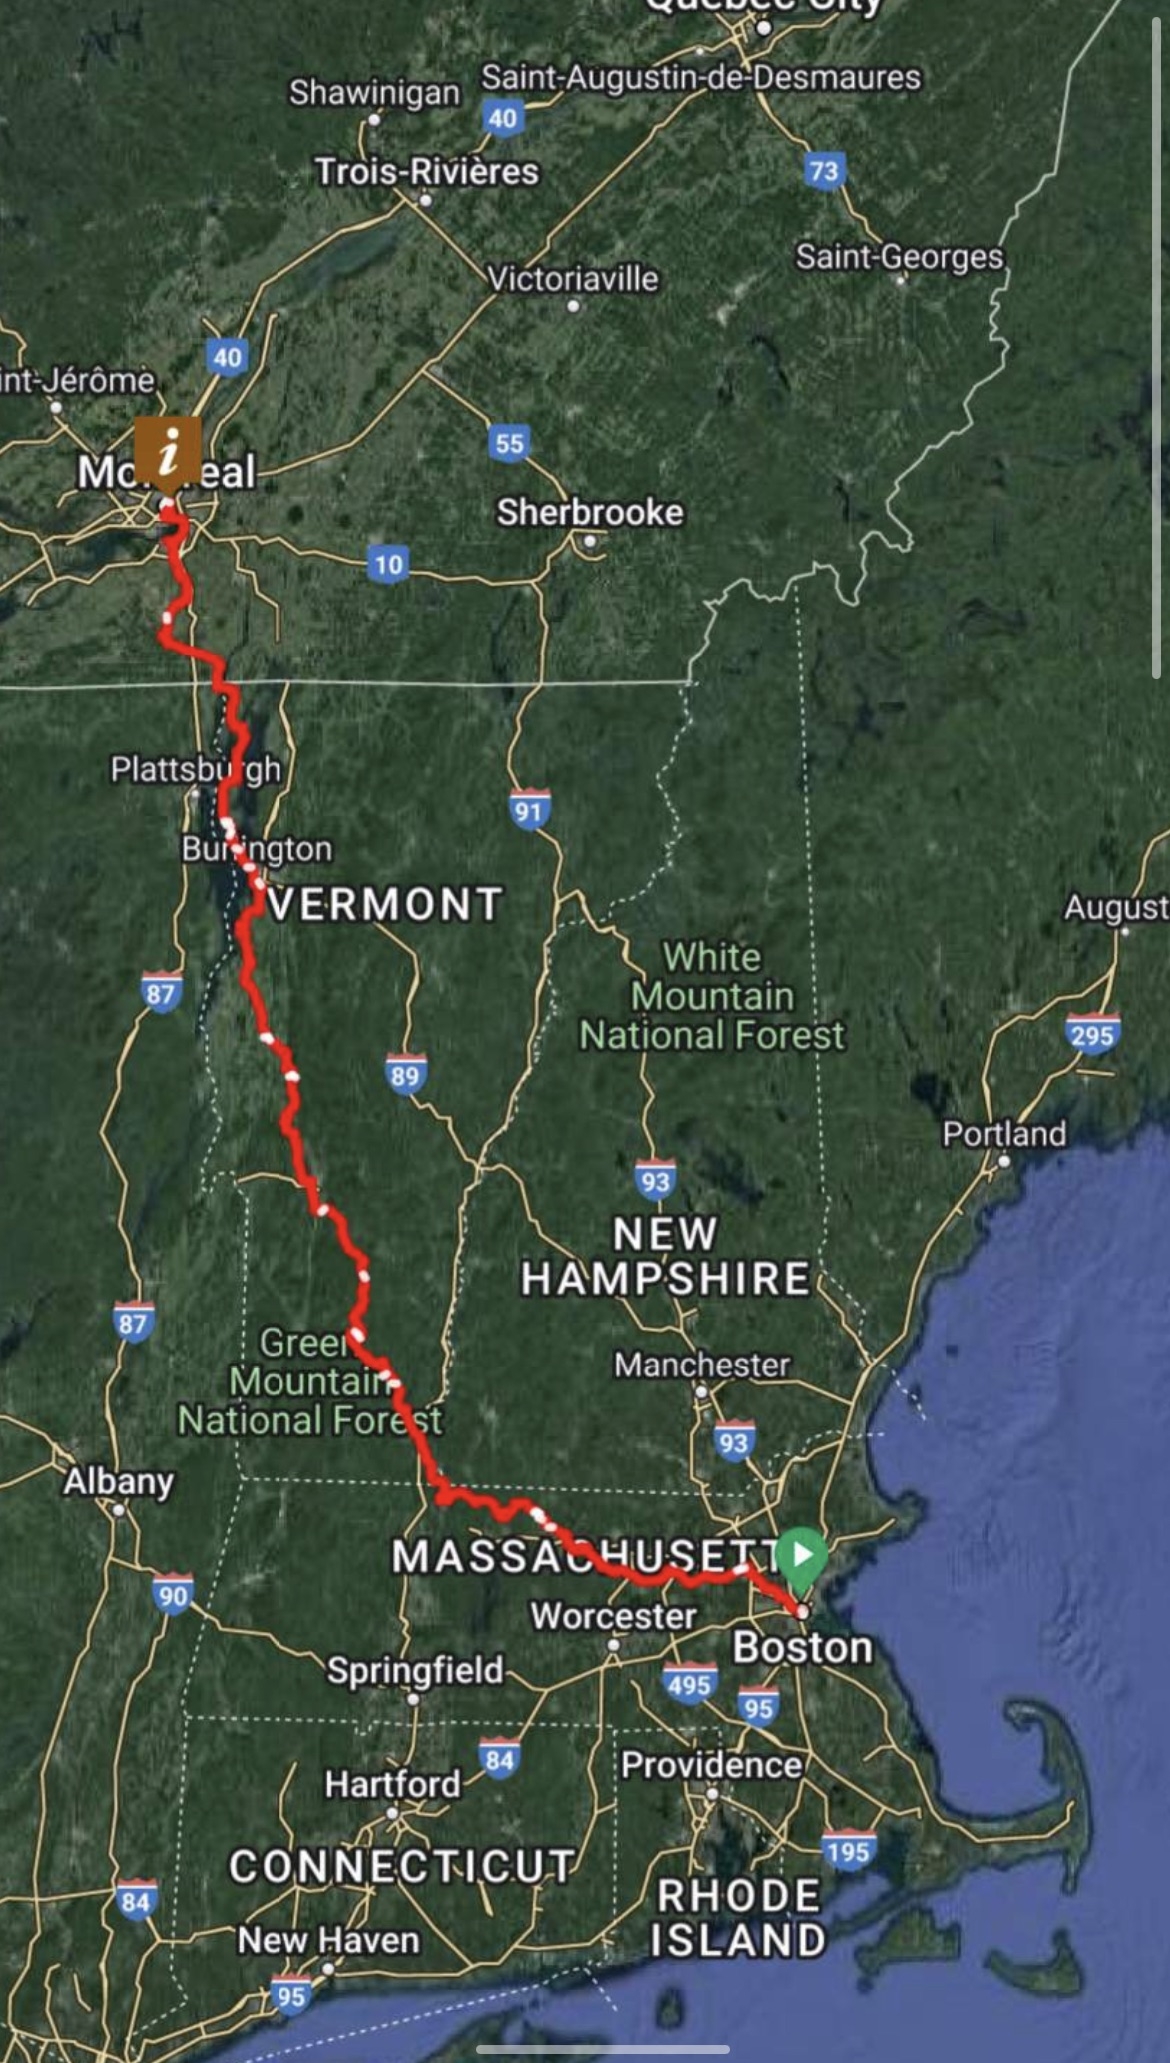 The entire ~400 mile route